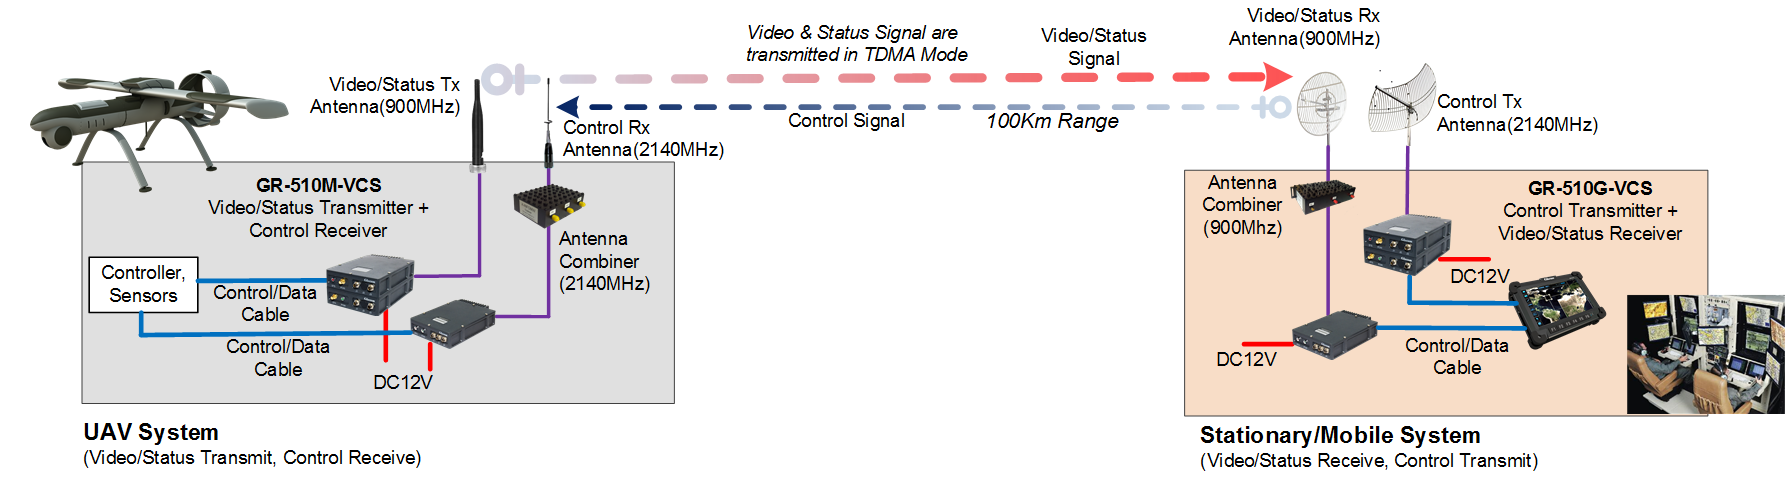 GS-2600-01 Video, Telemetry/Control System for USV/UAV